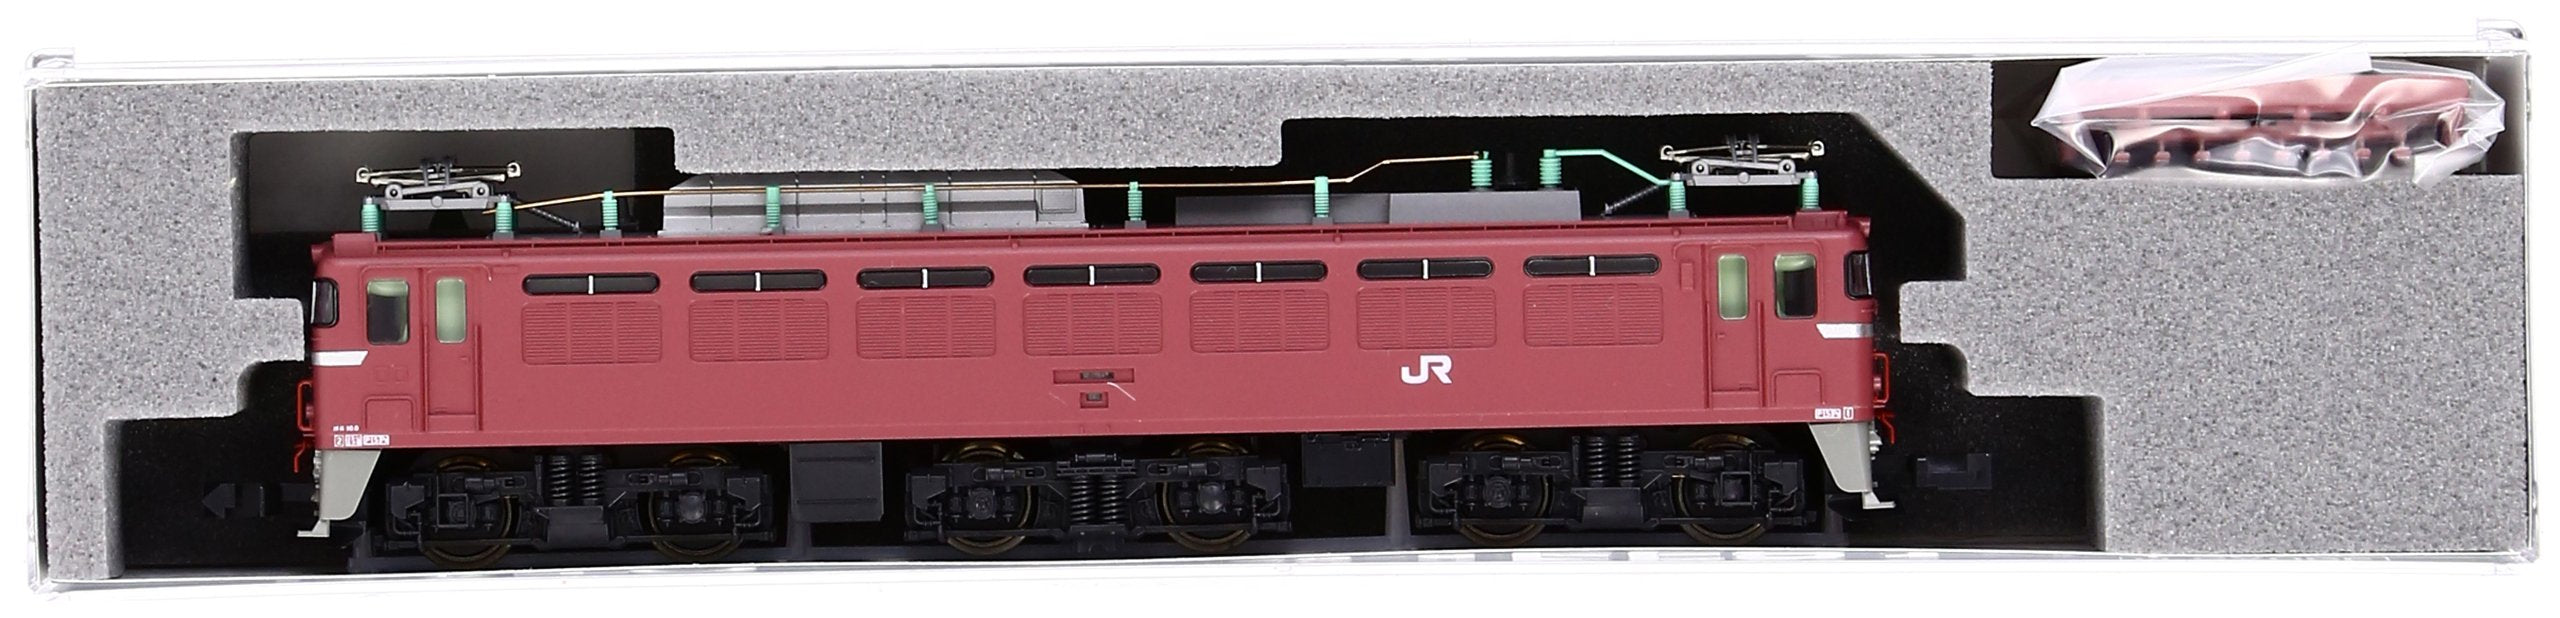 Kato N Gauge Railway Model Electric Locomotive - Ef81 General Color Tsuruga Dispatch 3066-3